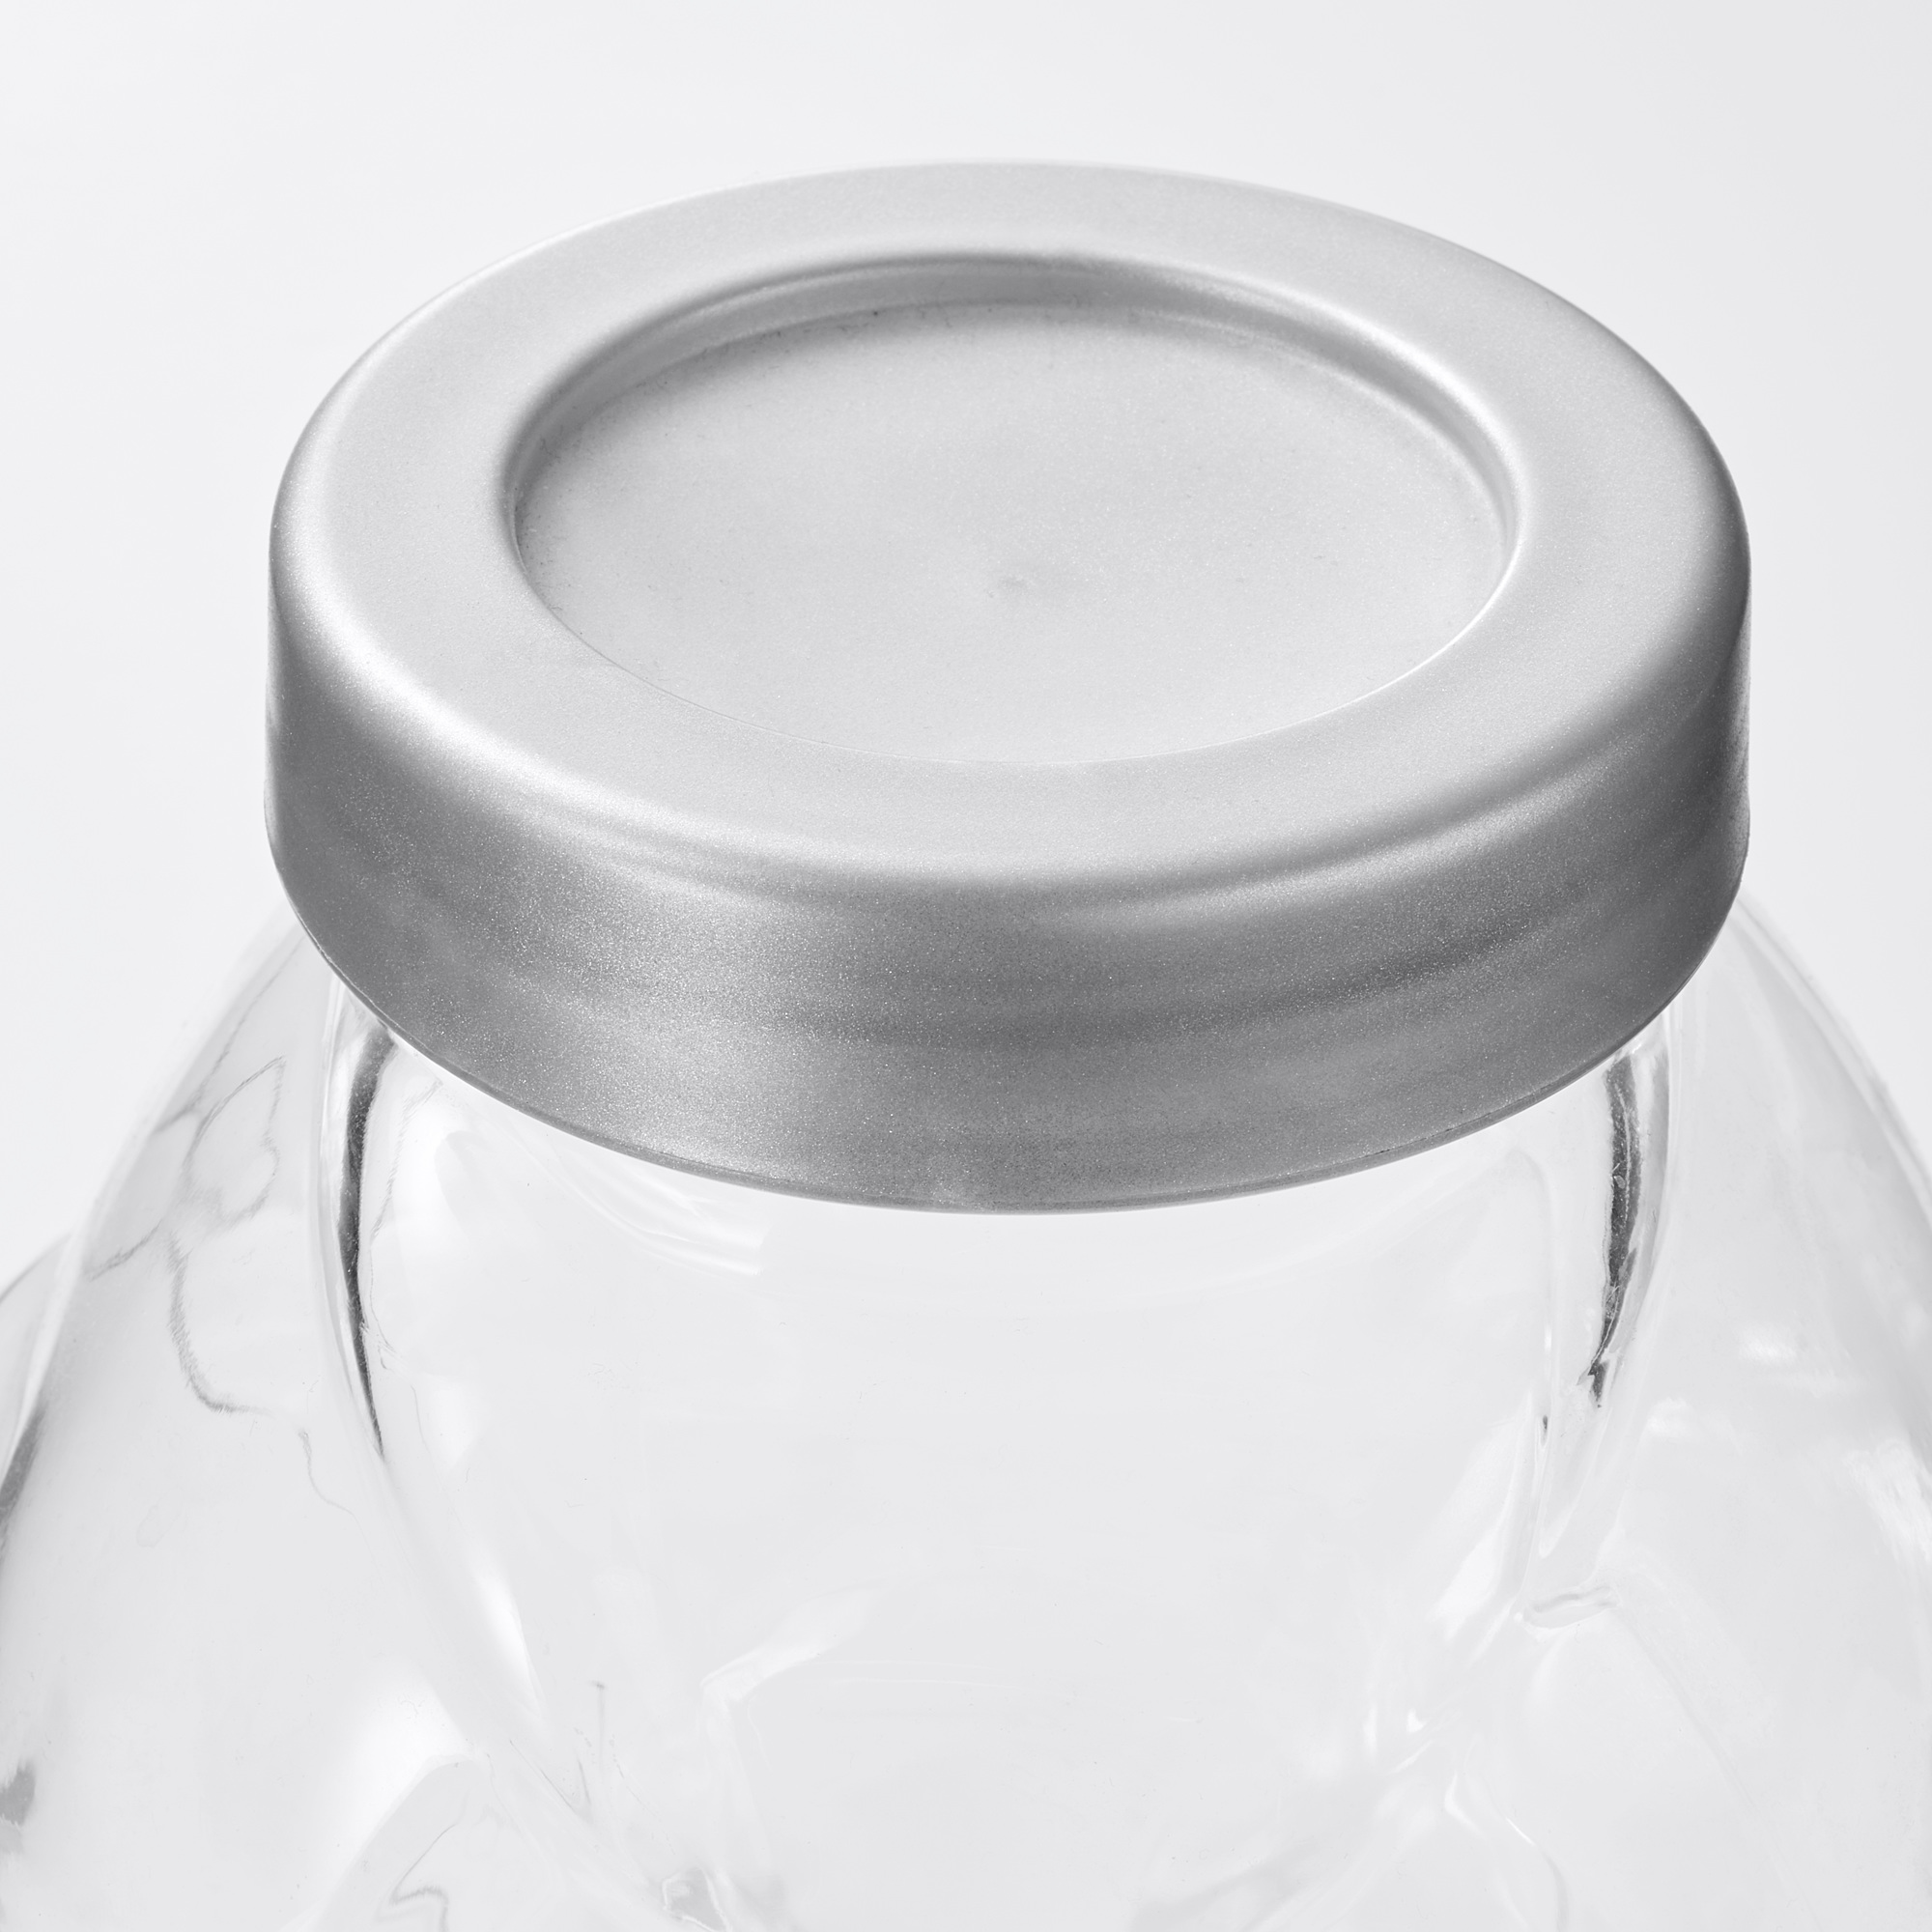 FÖRVAR jar with lid